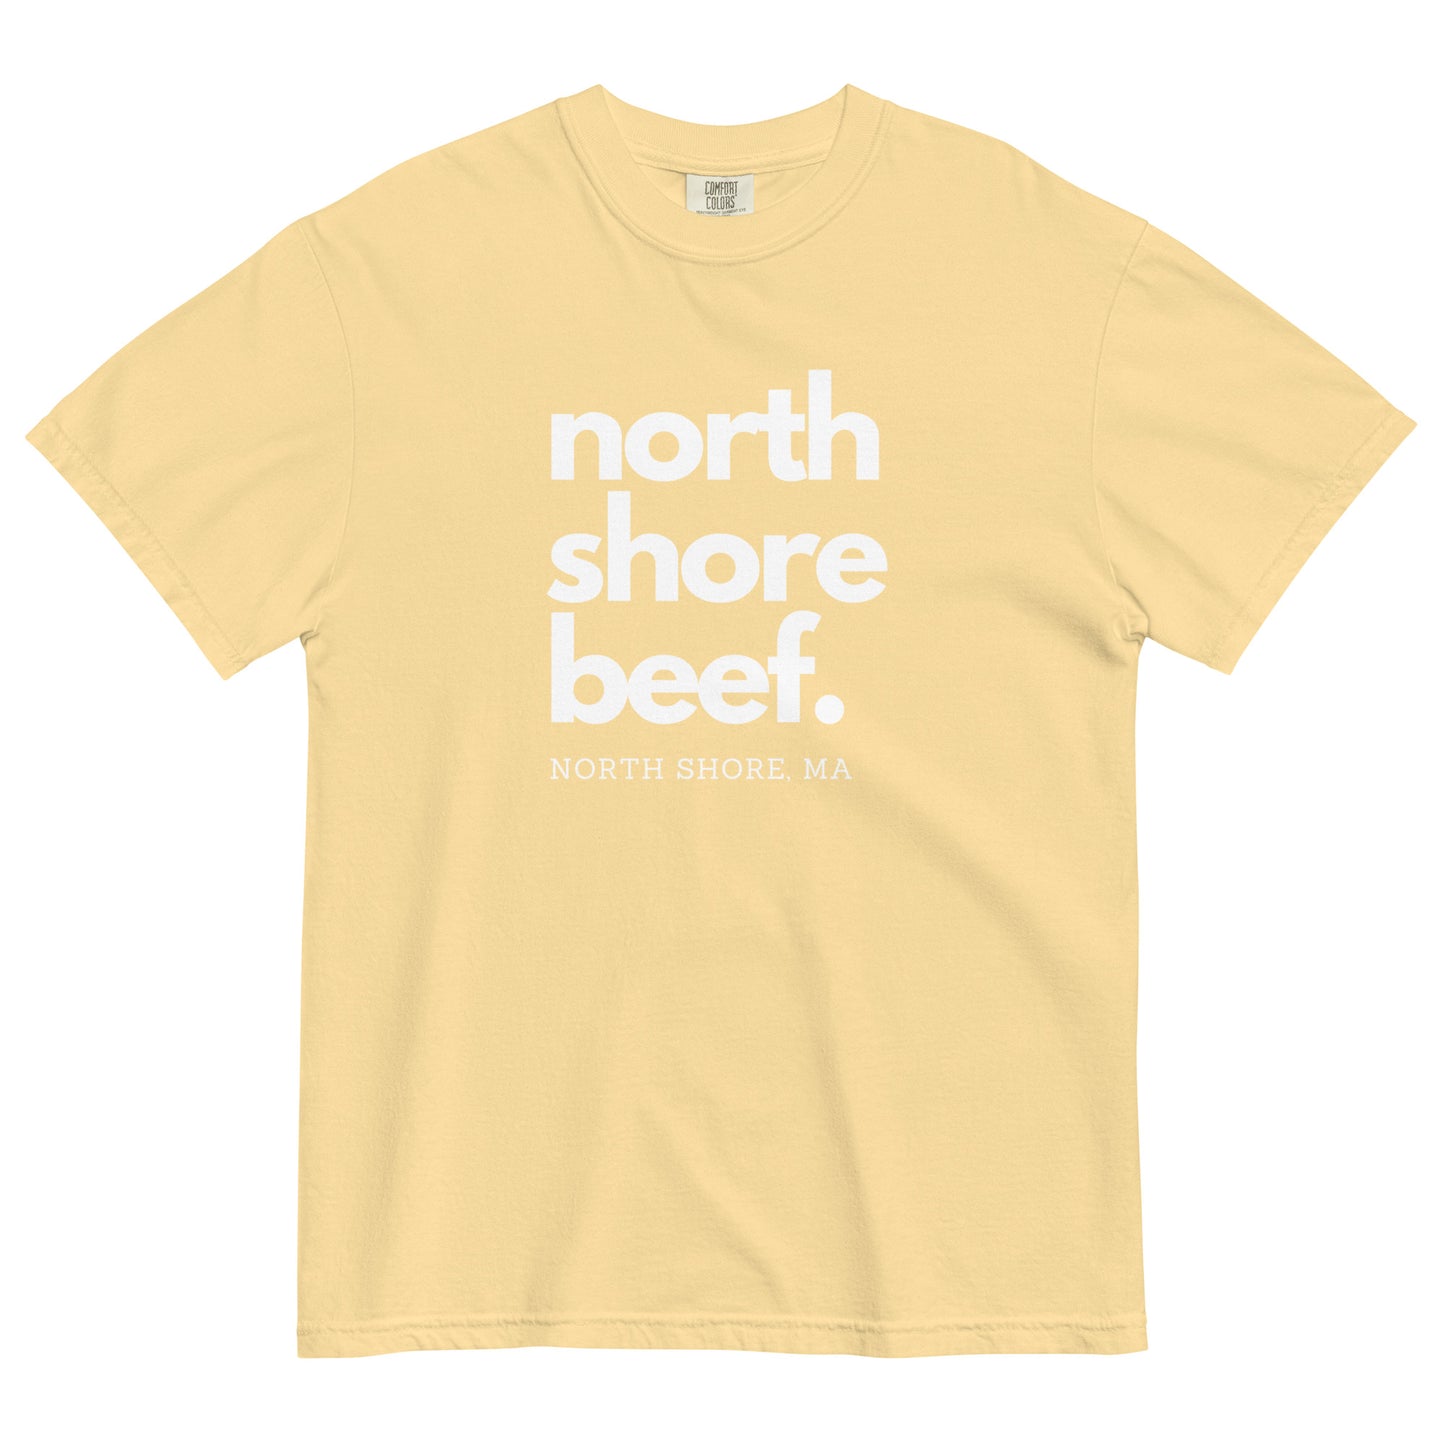 North Shore Beef T-Shirt